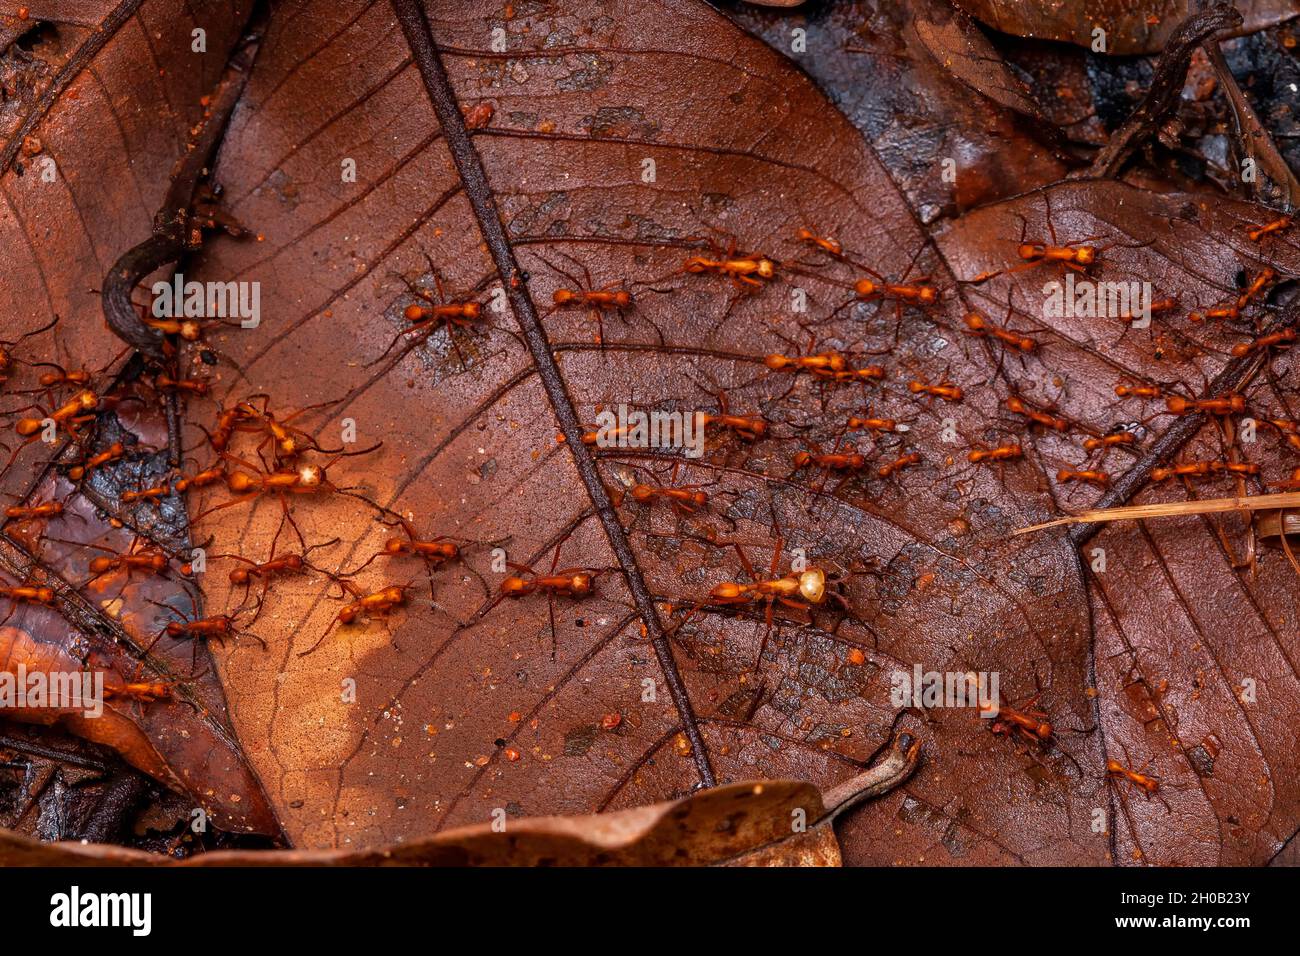 Army ant (Eciton burchelli) on a leaf, Montagne de Fer, French Guyana Stock Photo